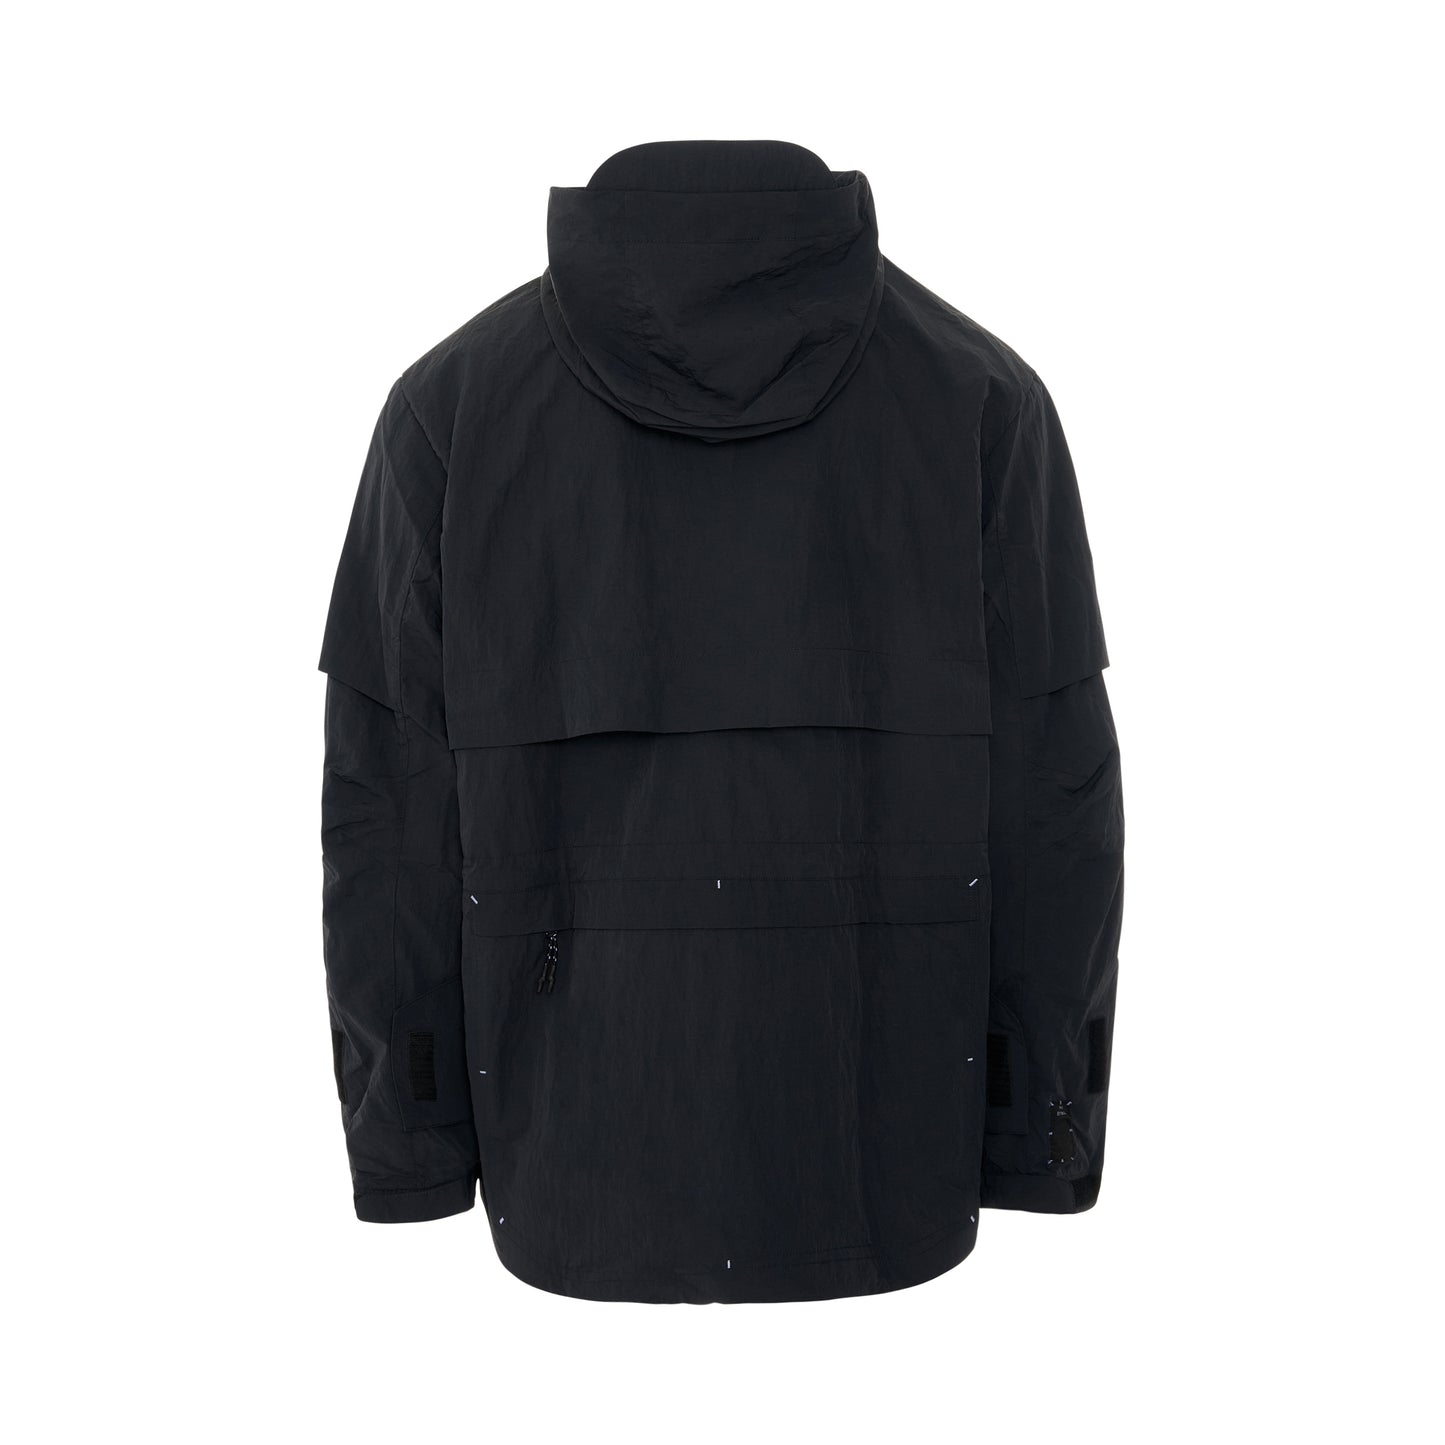 IC0 Flash Jacket in Black